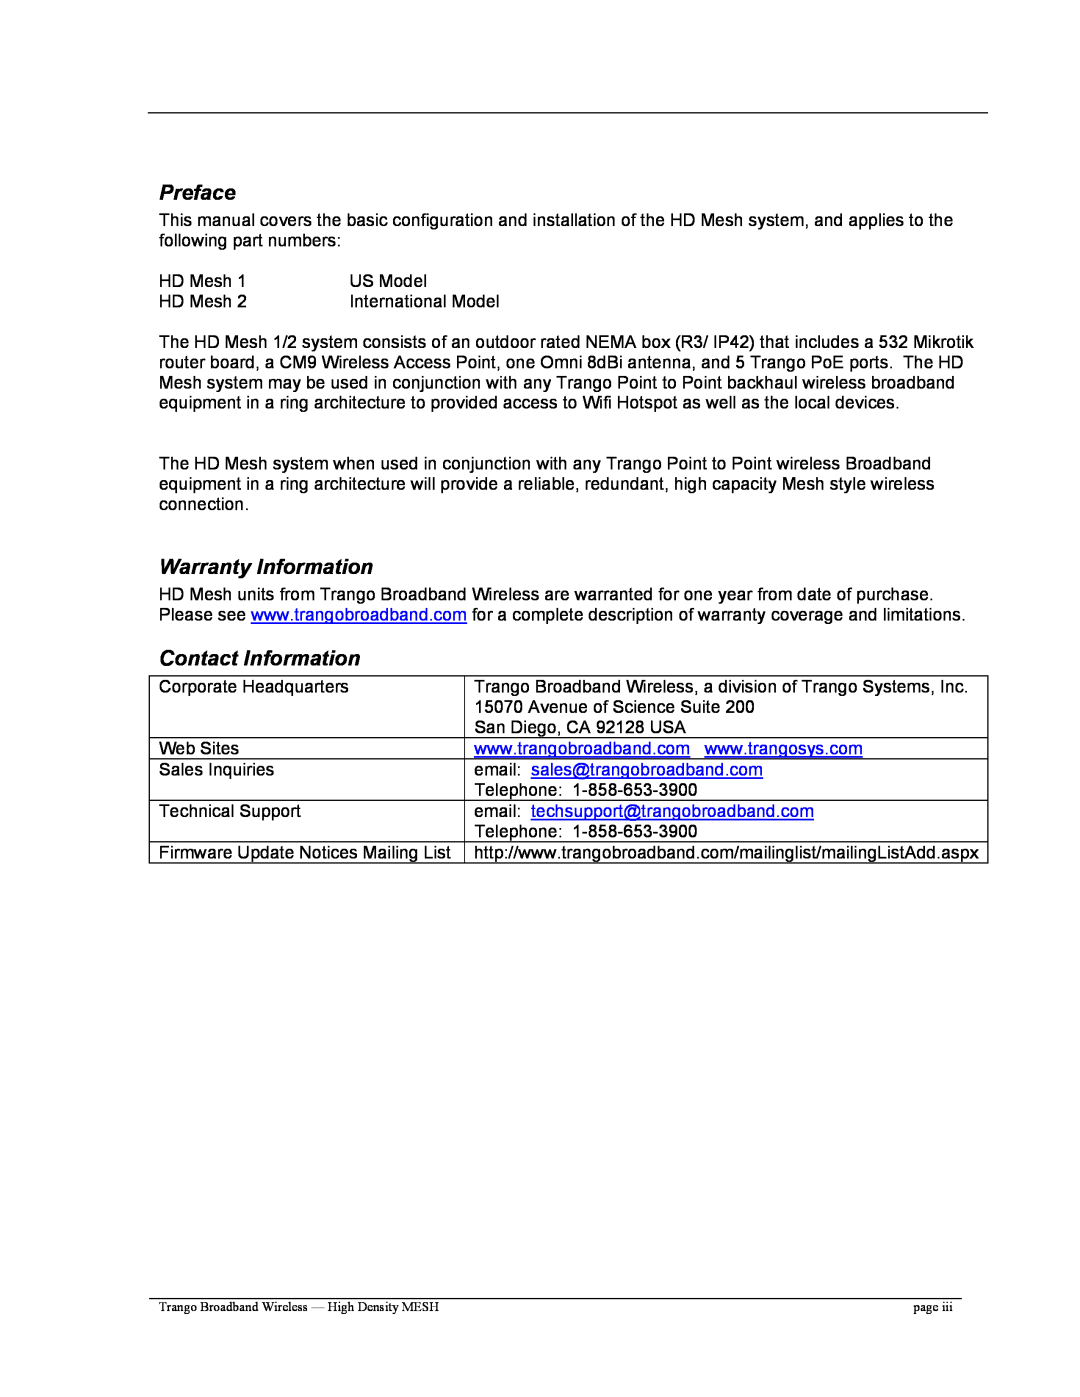 Trango Broadband High Density Mesh System user manual Preface, Warranty Information, Contact Information 